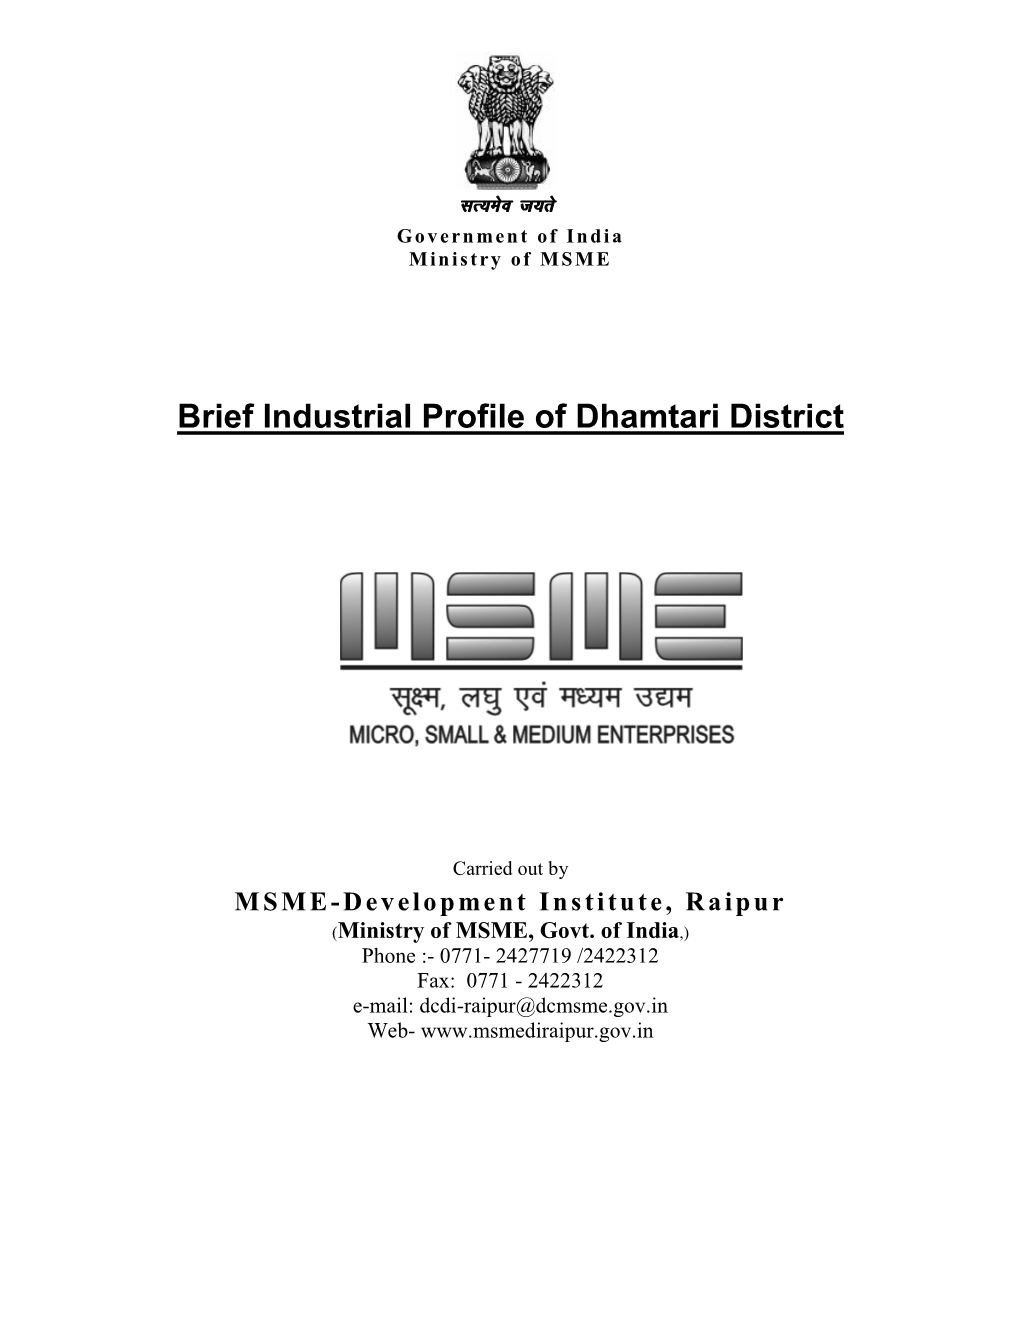 Brief Industrial Profile of Dhamtari District